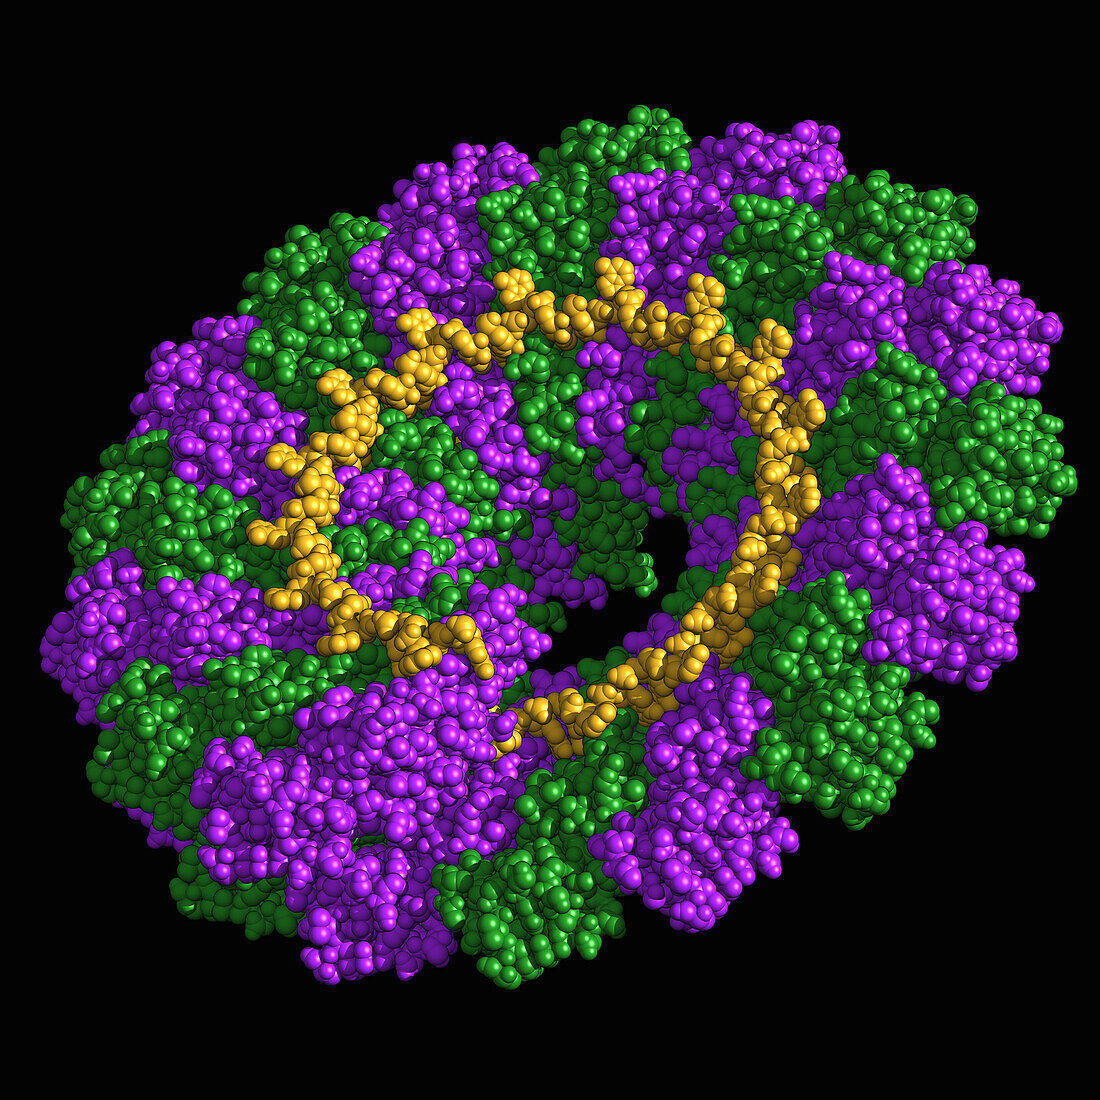 Tobacco mosaic virus capsid, molecular model